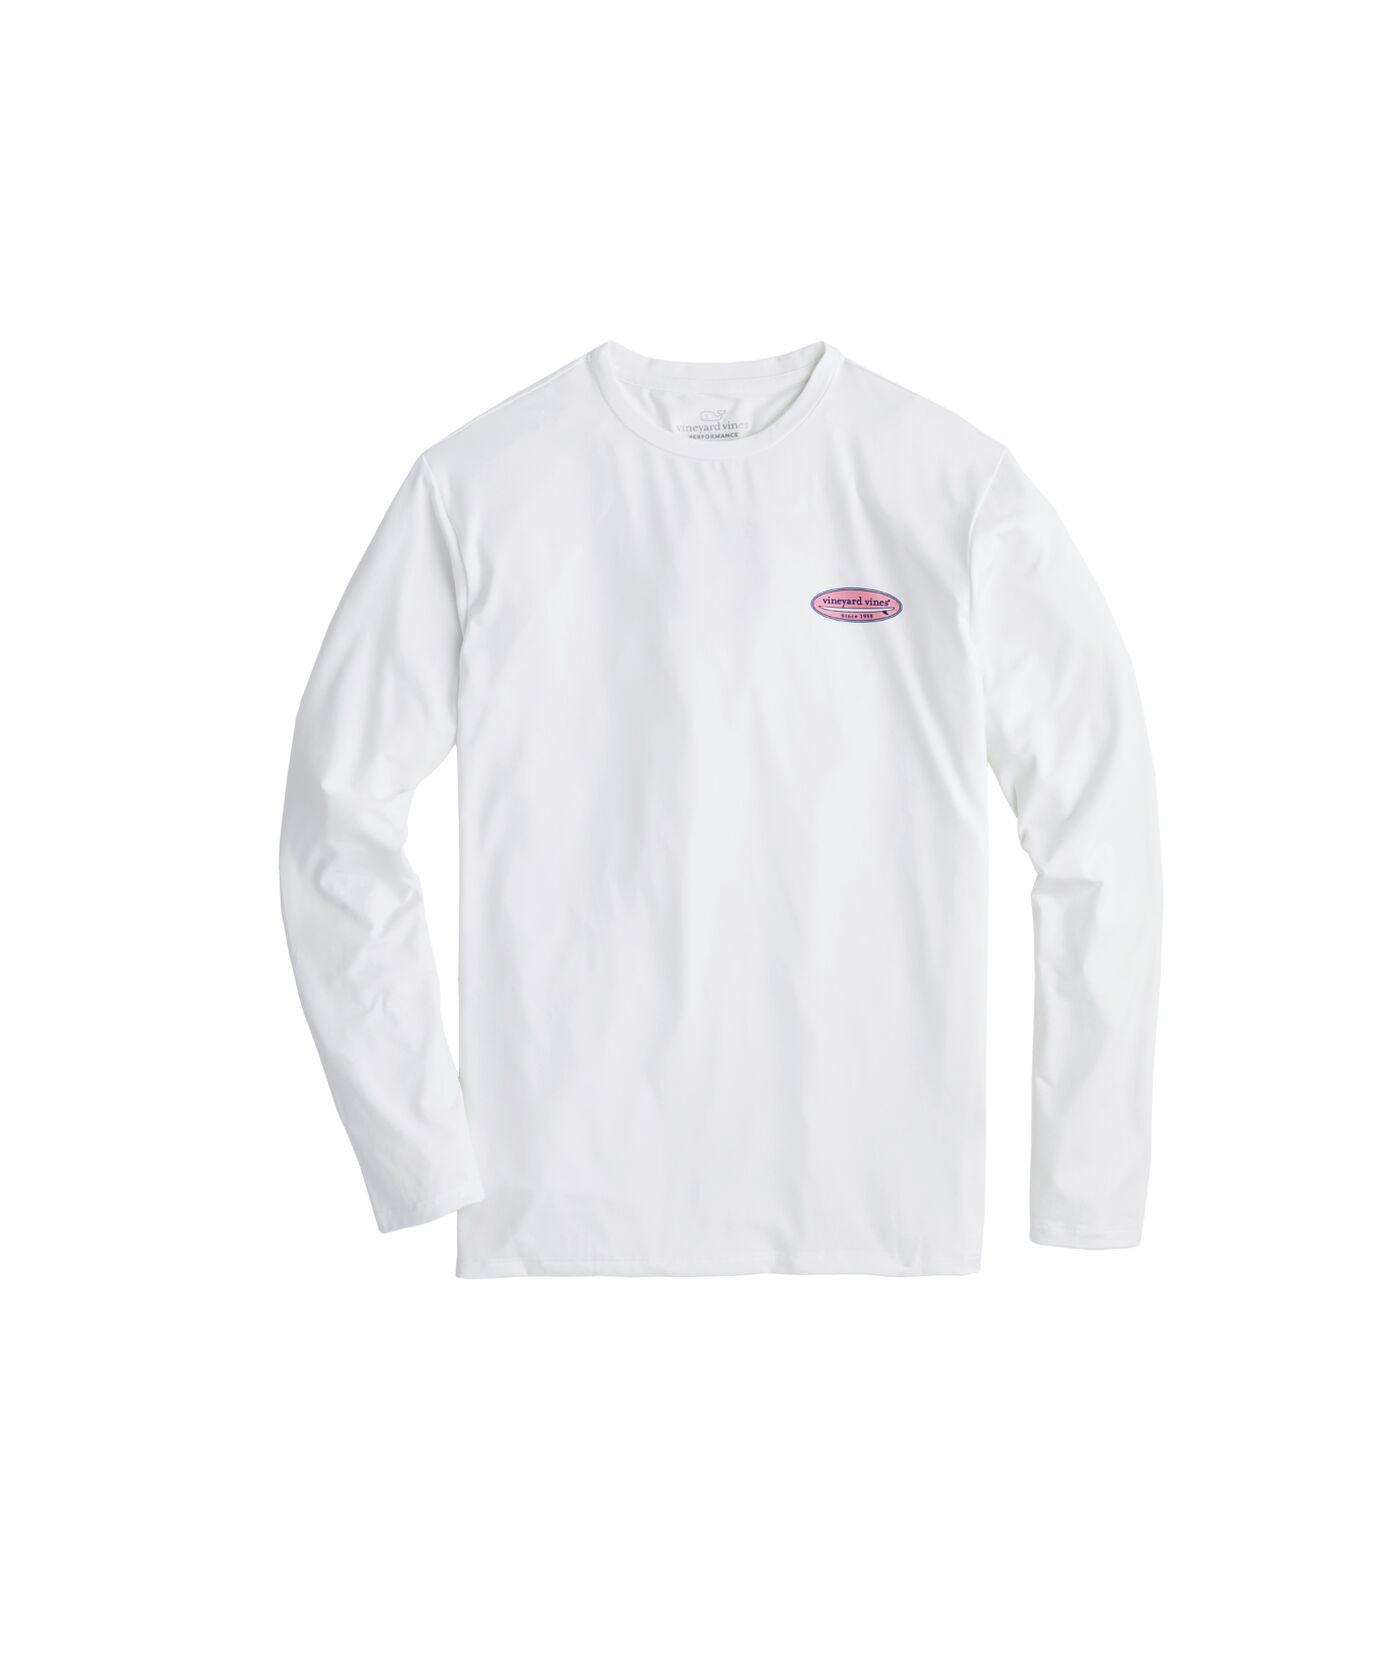 Shop Long-Sleeve Performance Surf Logo T-Shirt at vineyard vines